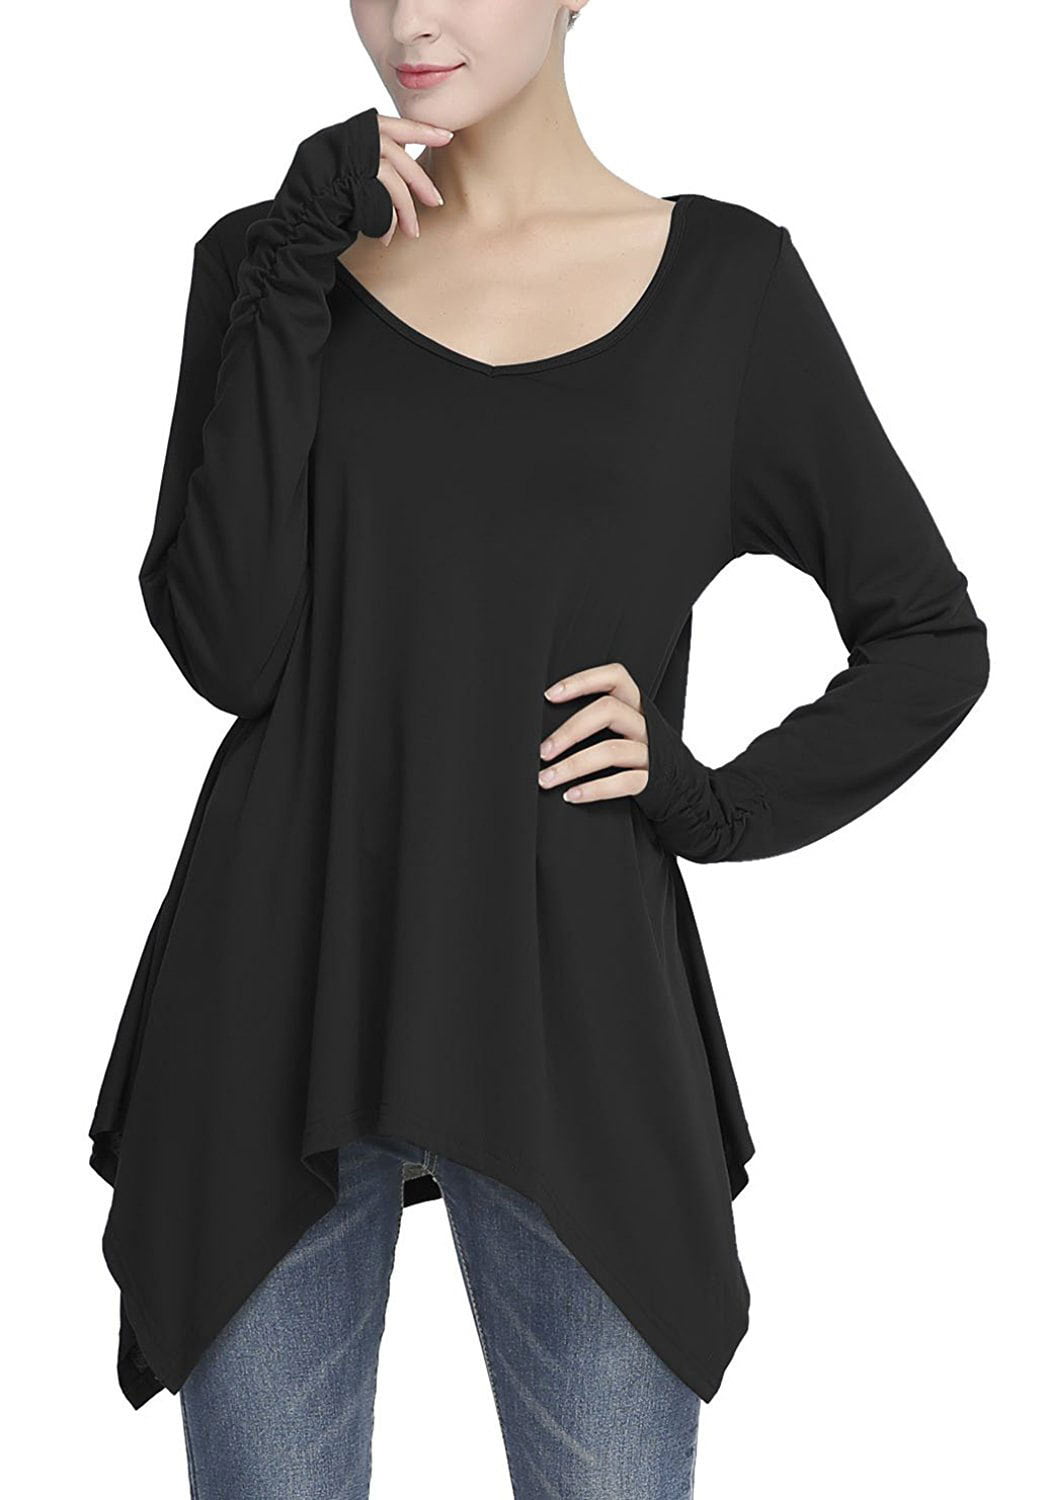 NoName blouse Black M discount 81% WOMEN FASHION Shirts & T-shirts Combined 